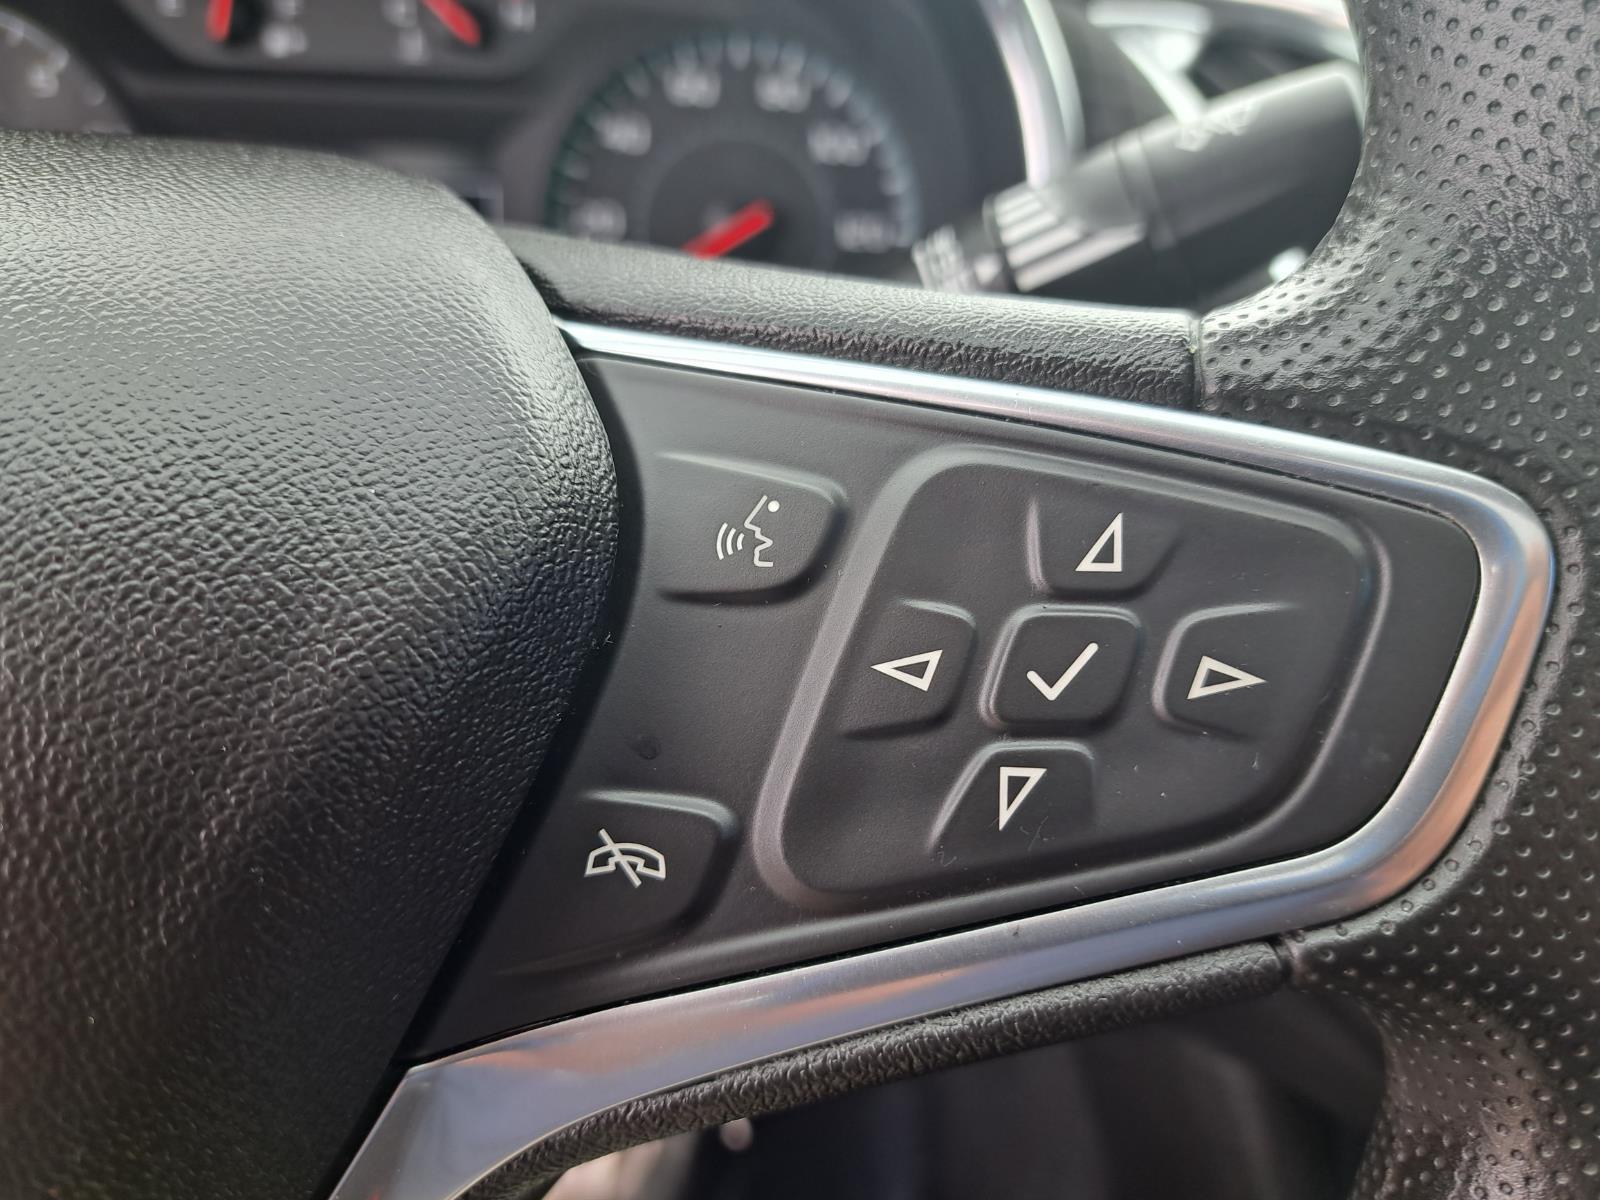 2019 Chevrolet Malibu LT Sedan 4 Dr. Front Wheel Drive mobile thumbnail 14